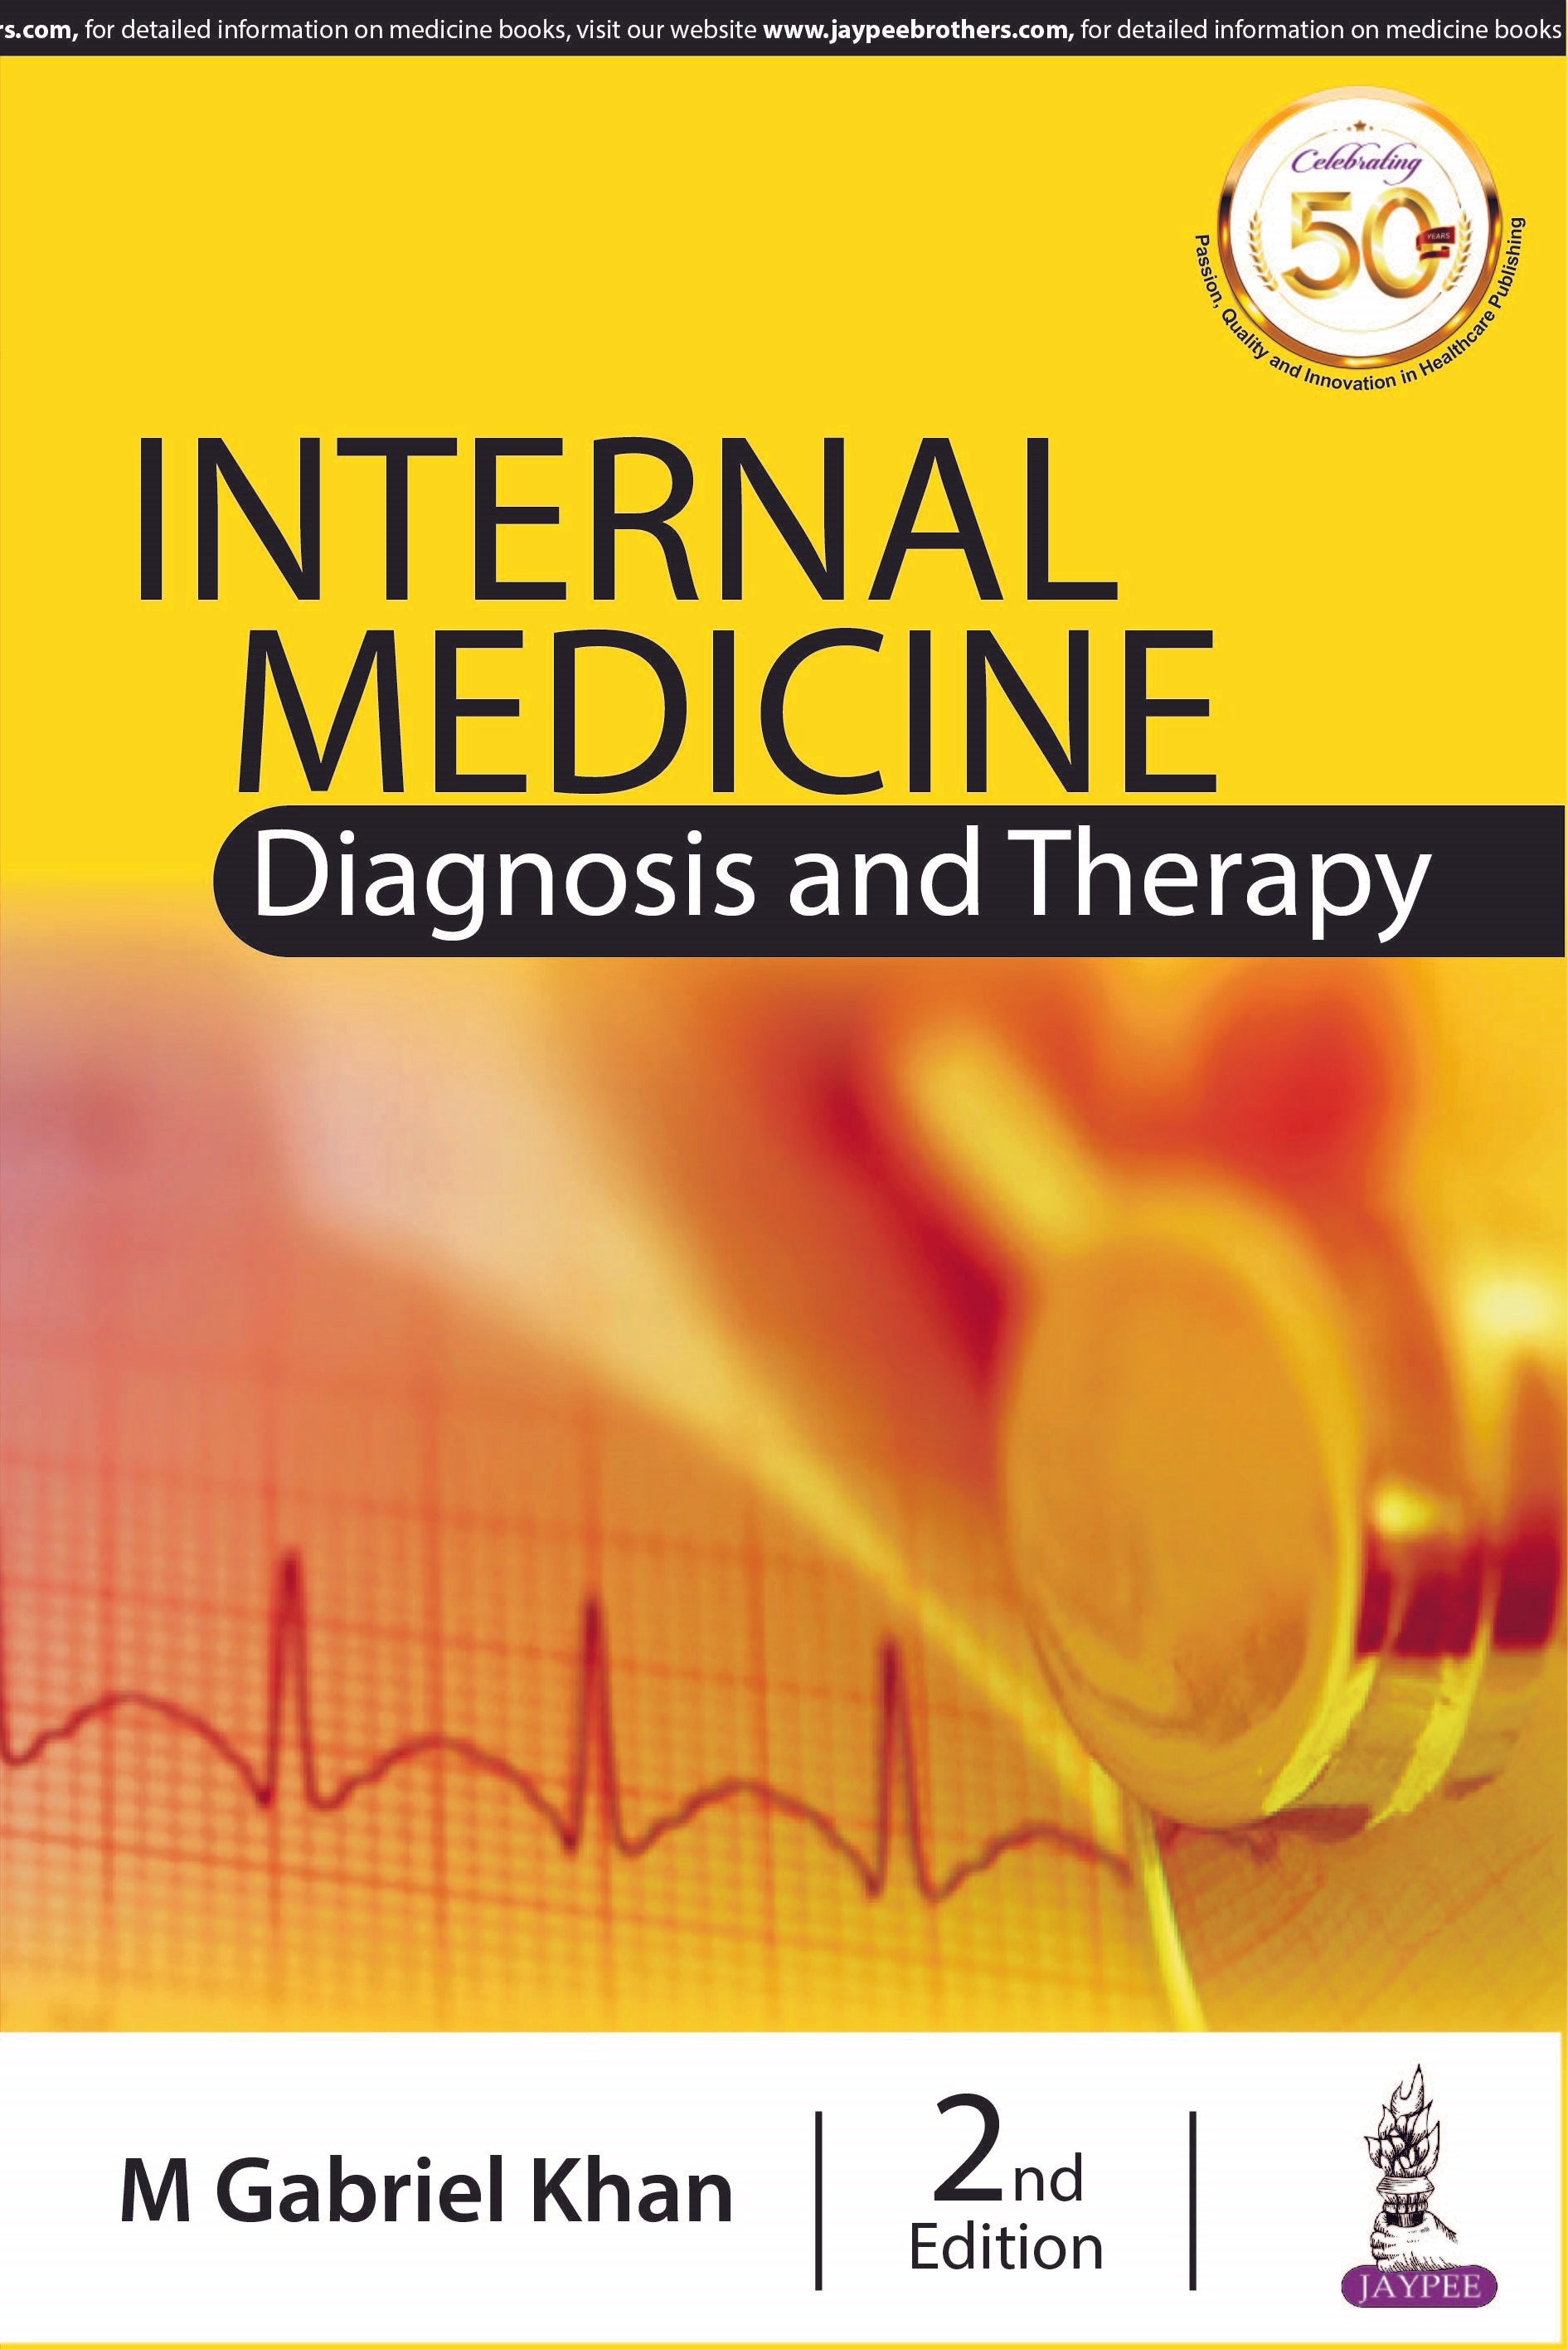 INTERNAL MEDICINE: DIAGNOSIS AND THERAPY
,2/E,M GABRIEL KHAN